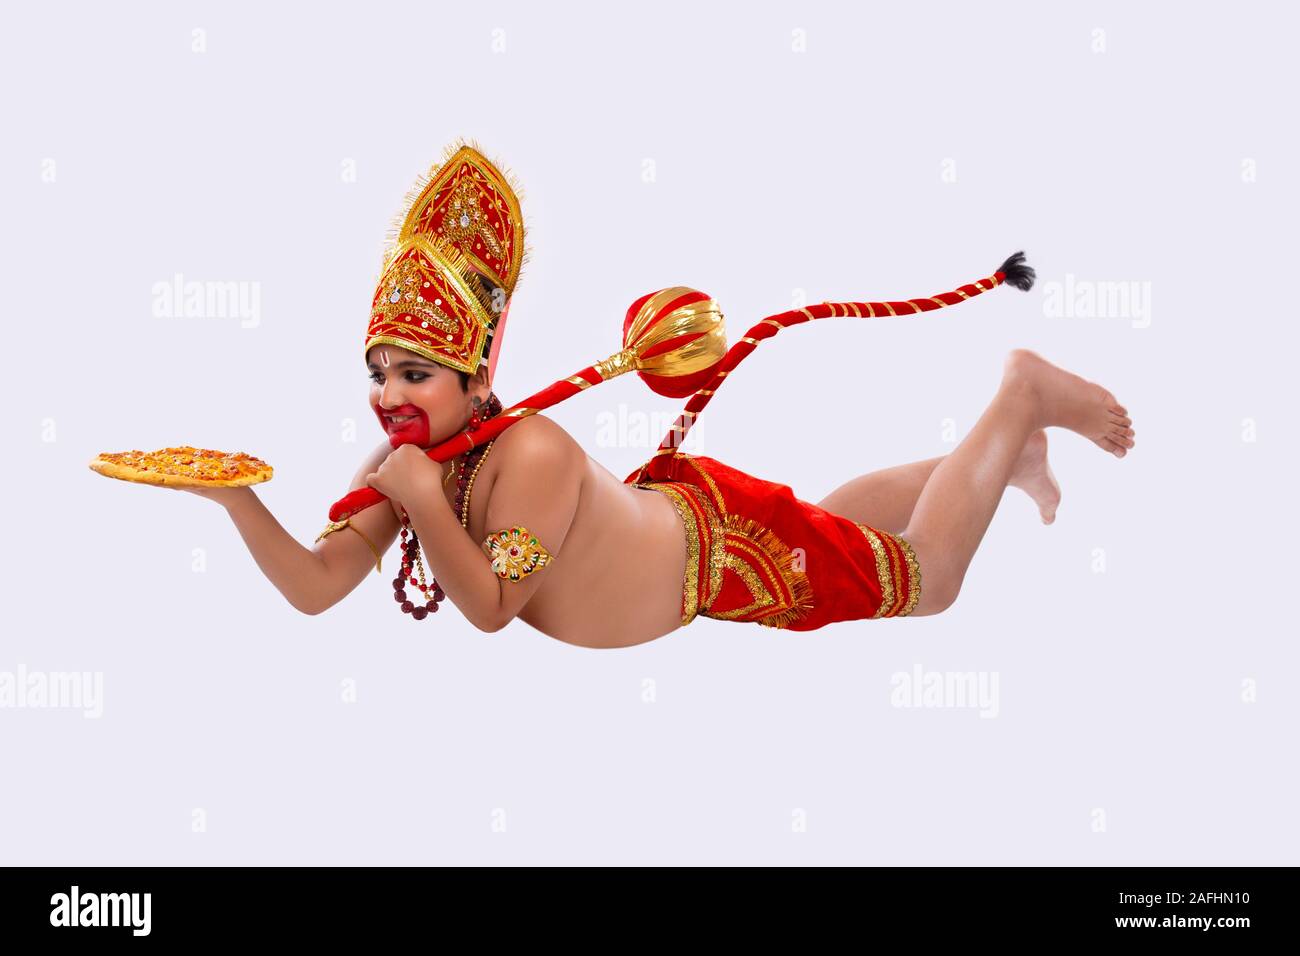 Herr Hanuman liefern Pizza Stockfoto